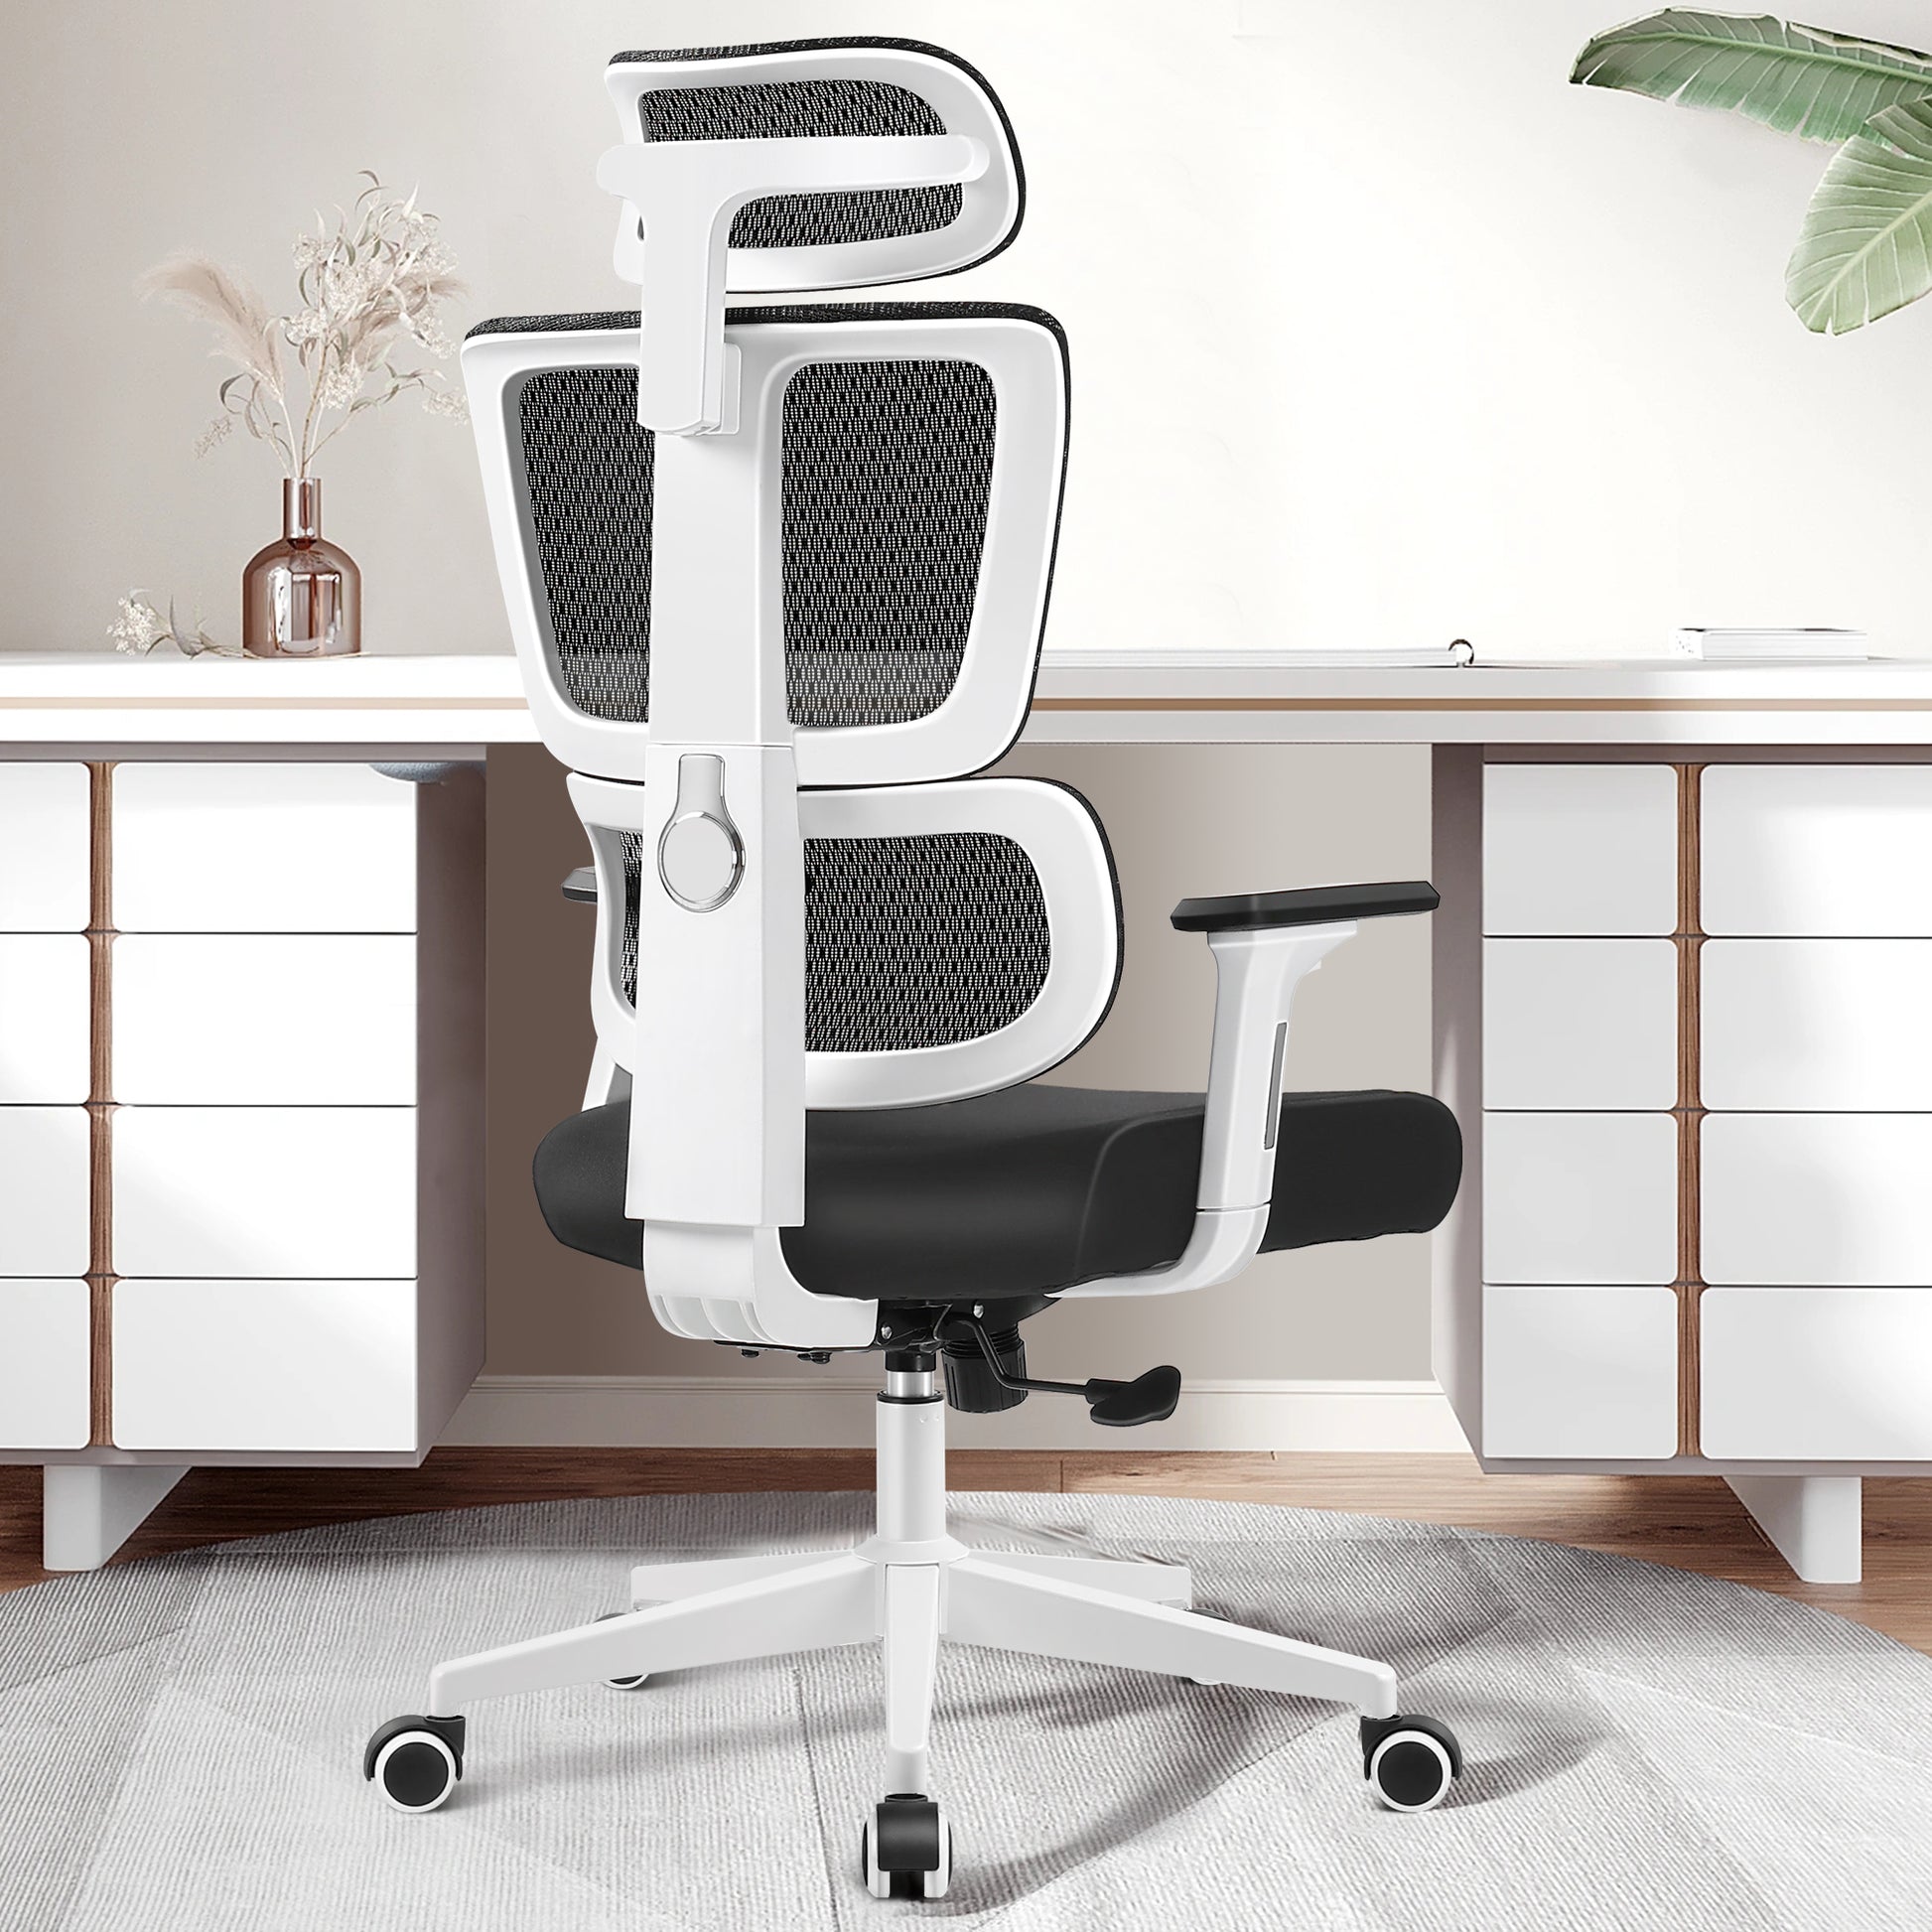 Ergonomic Office Chair With 3D Adjustable Backrest